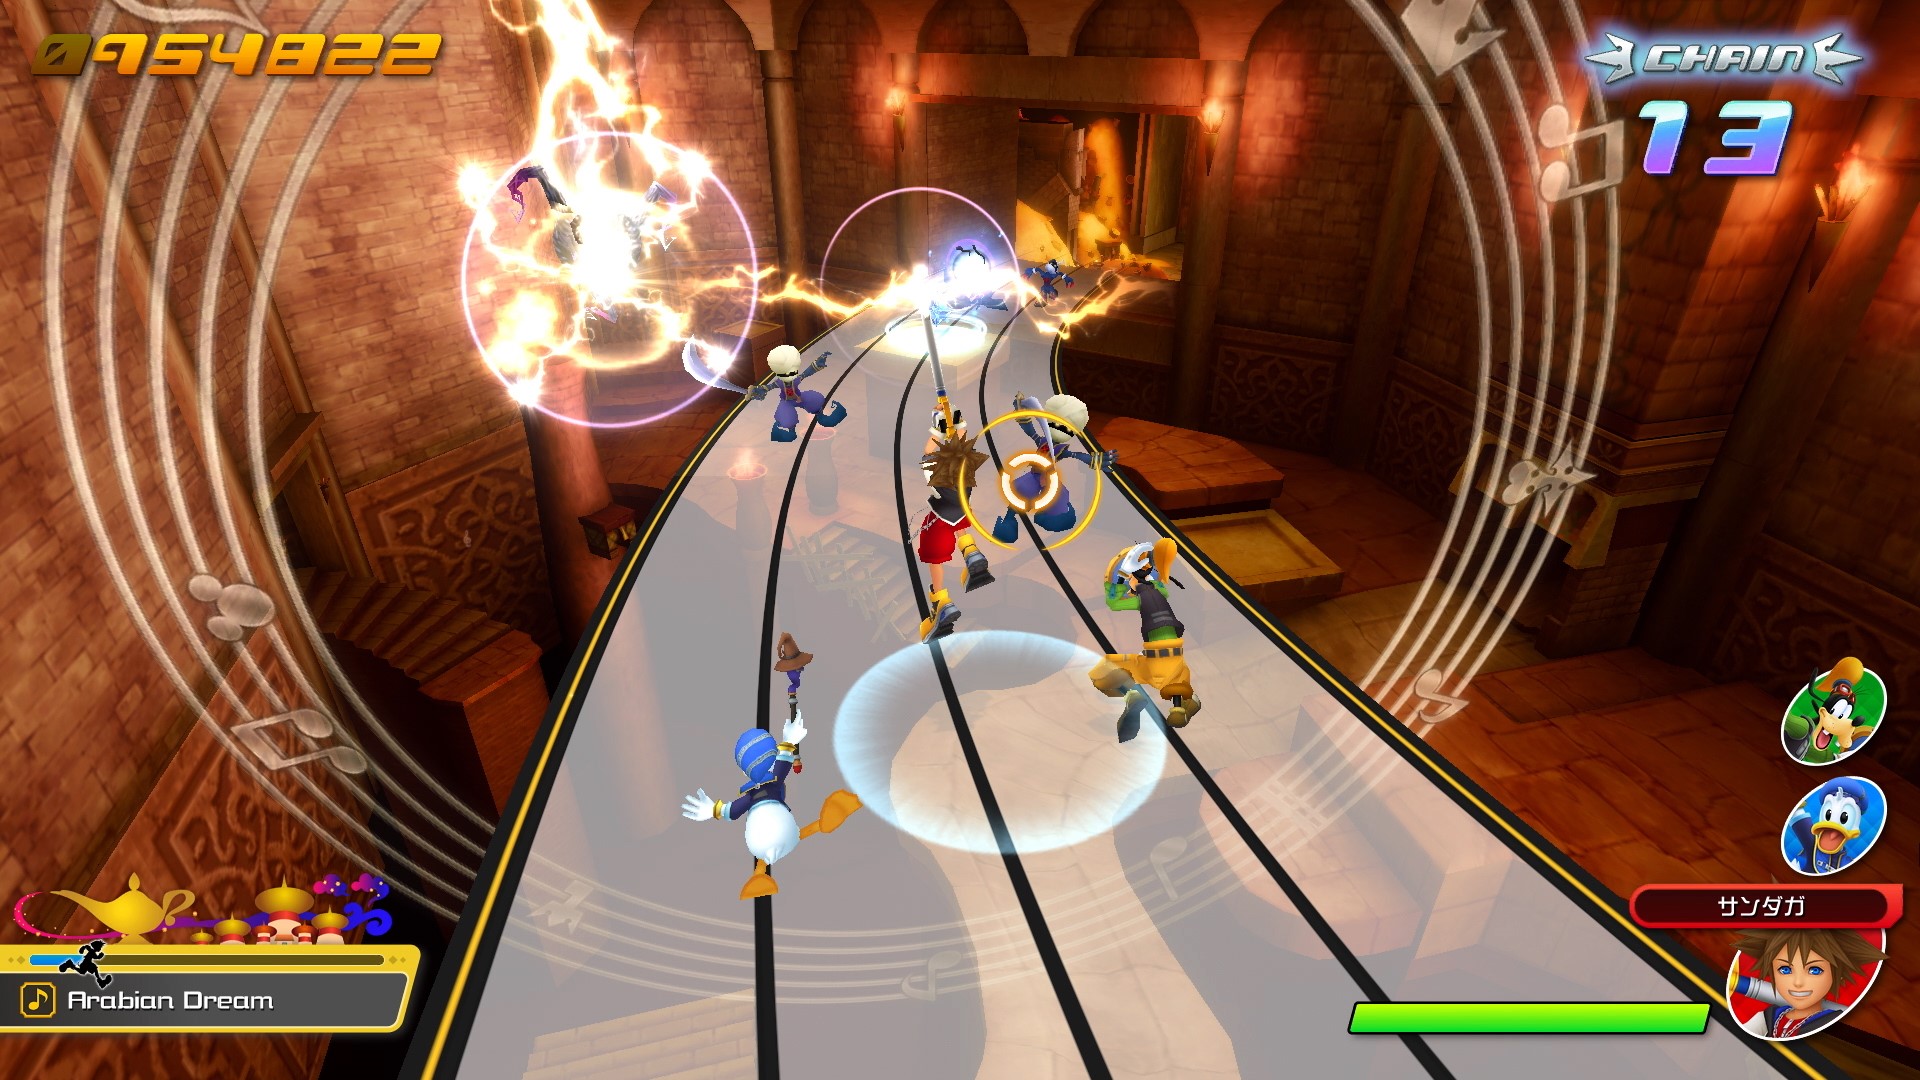 Kingdom Hearts Melody of Memory Gets New Screenshots, Gameplay